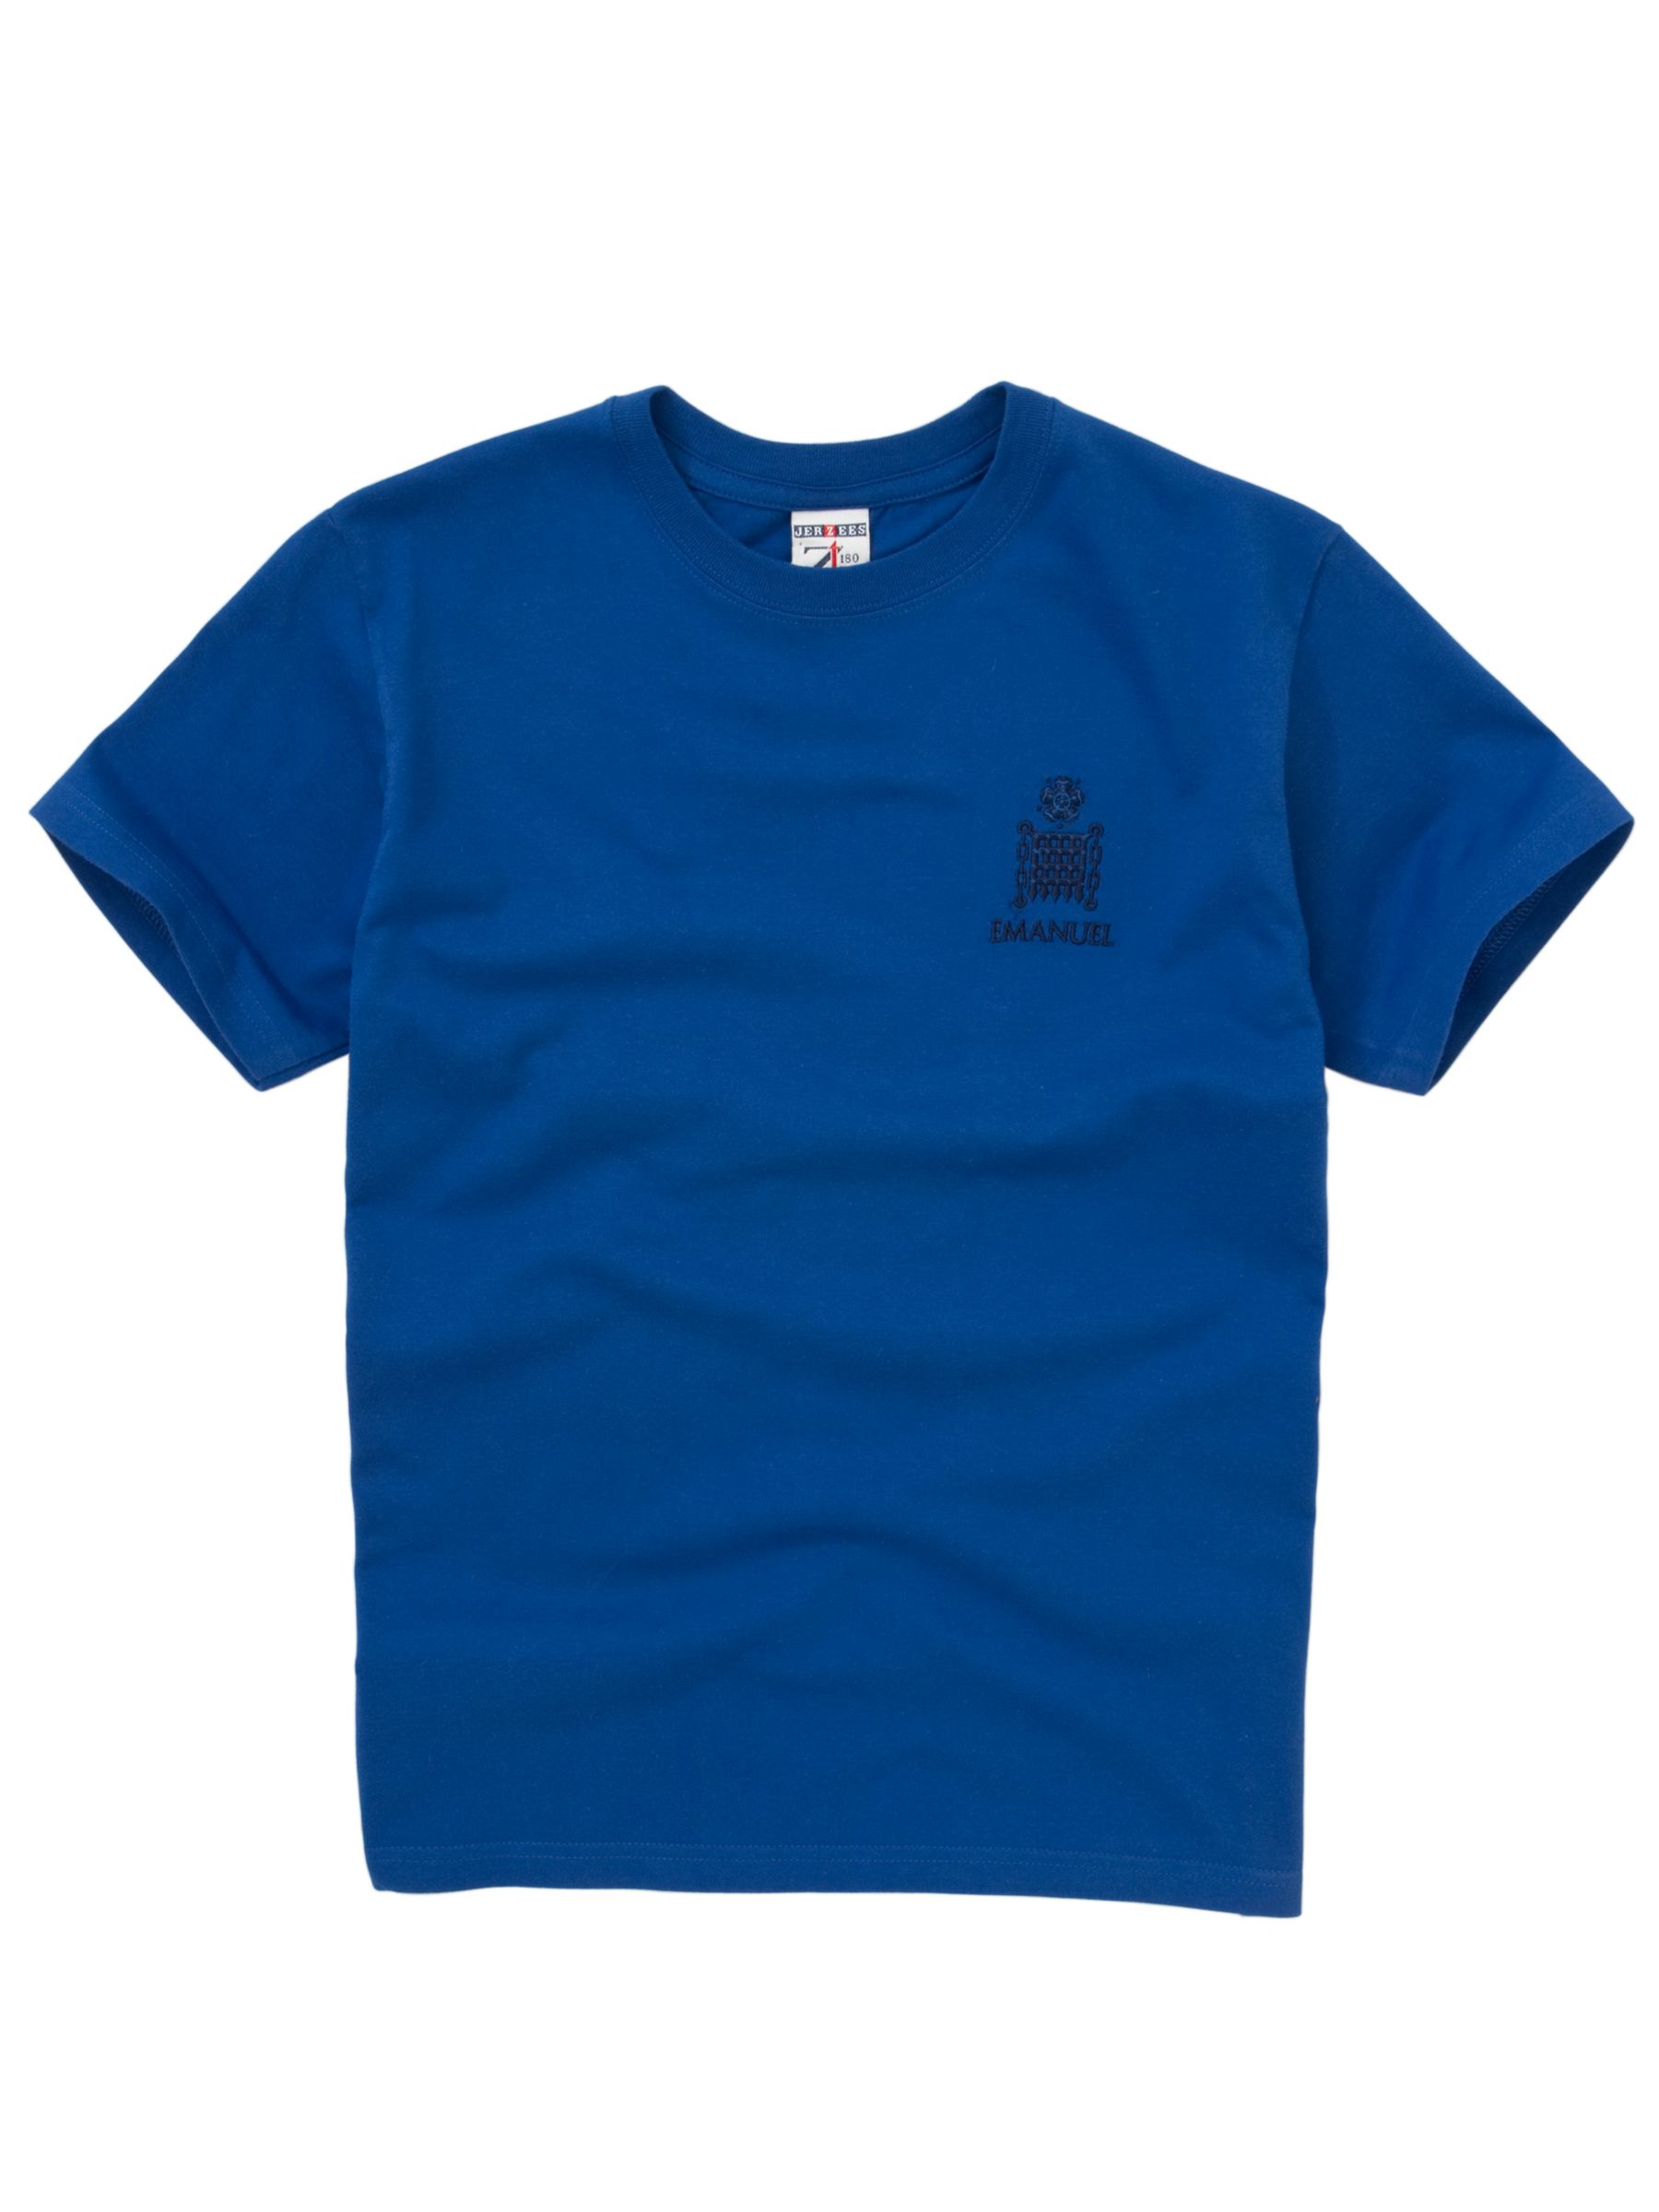 Unisex Clyde/Howe Sports T-Shirt,